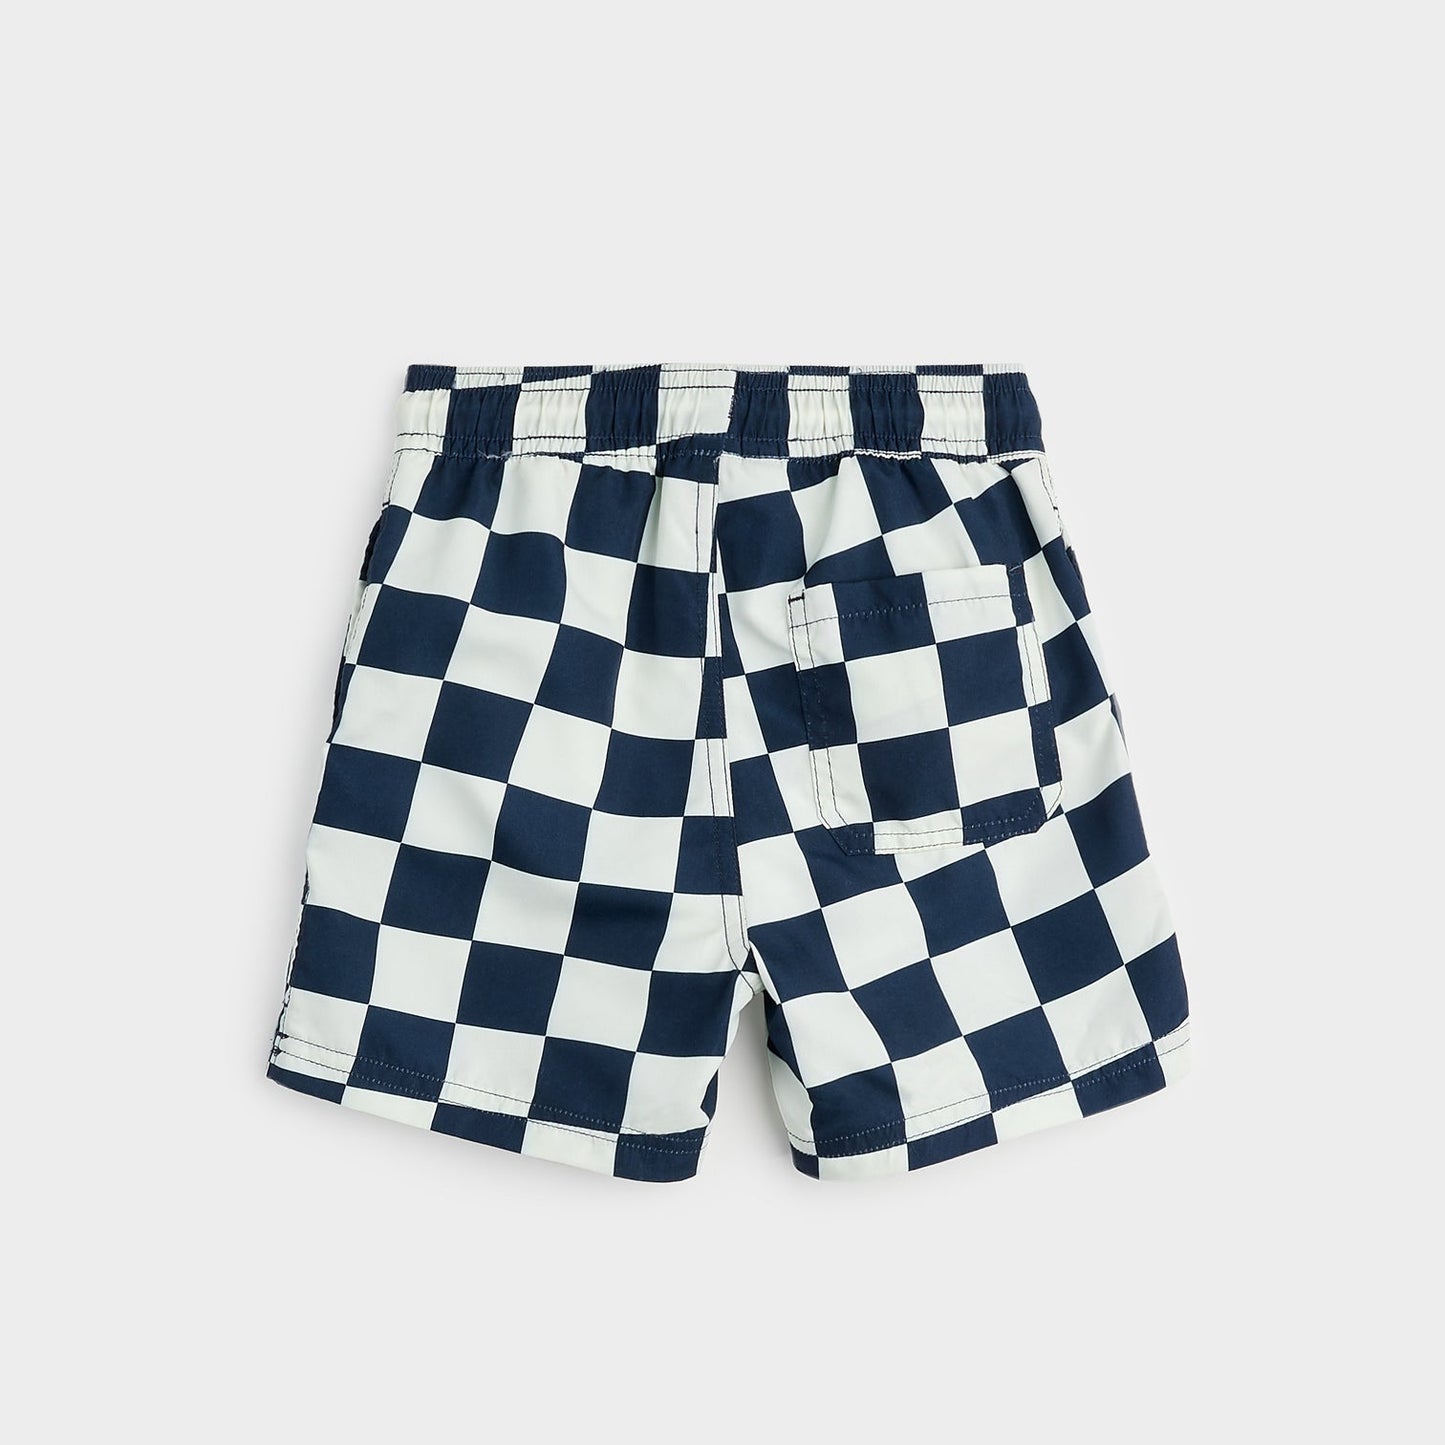 Navy/Teal Checkered Swim Short